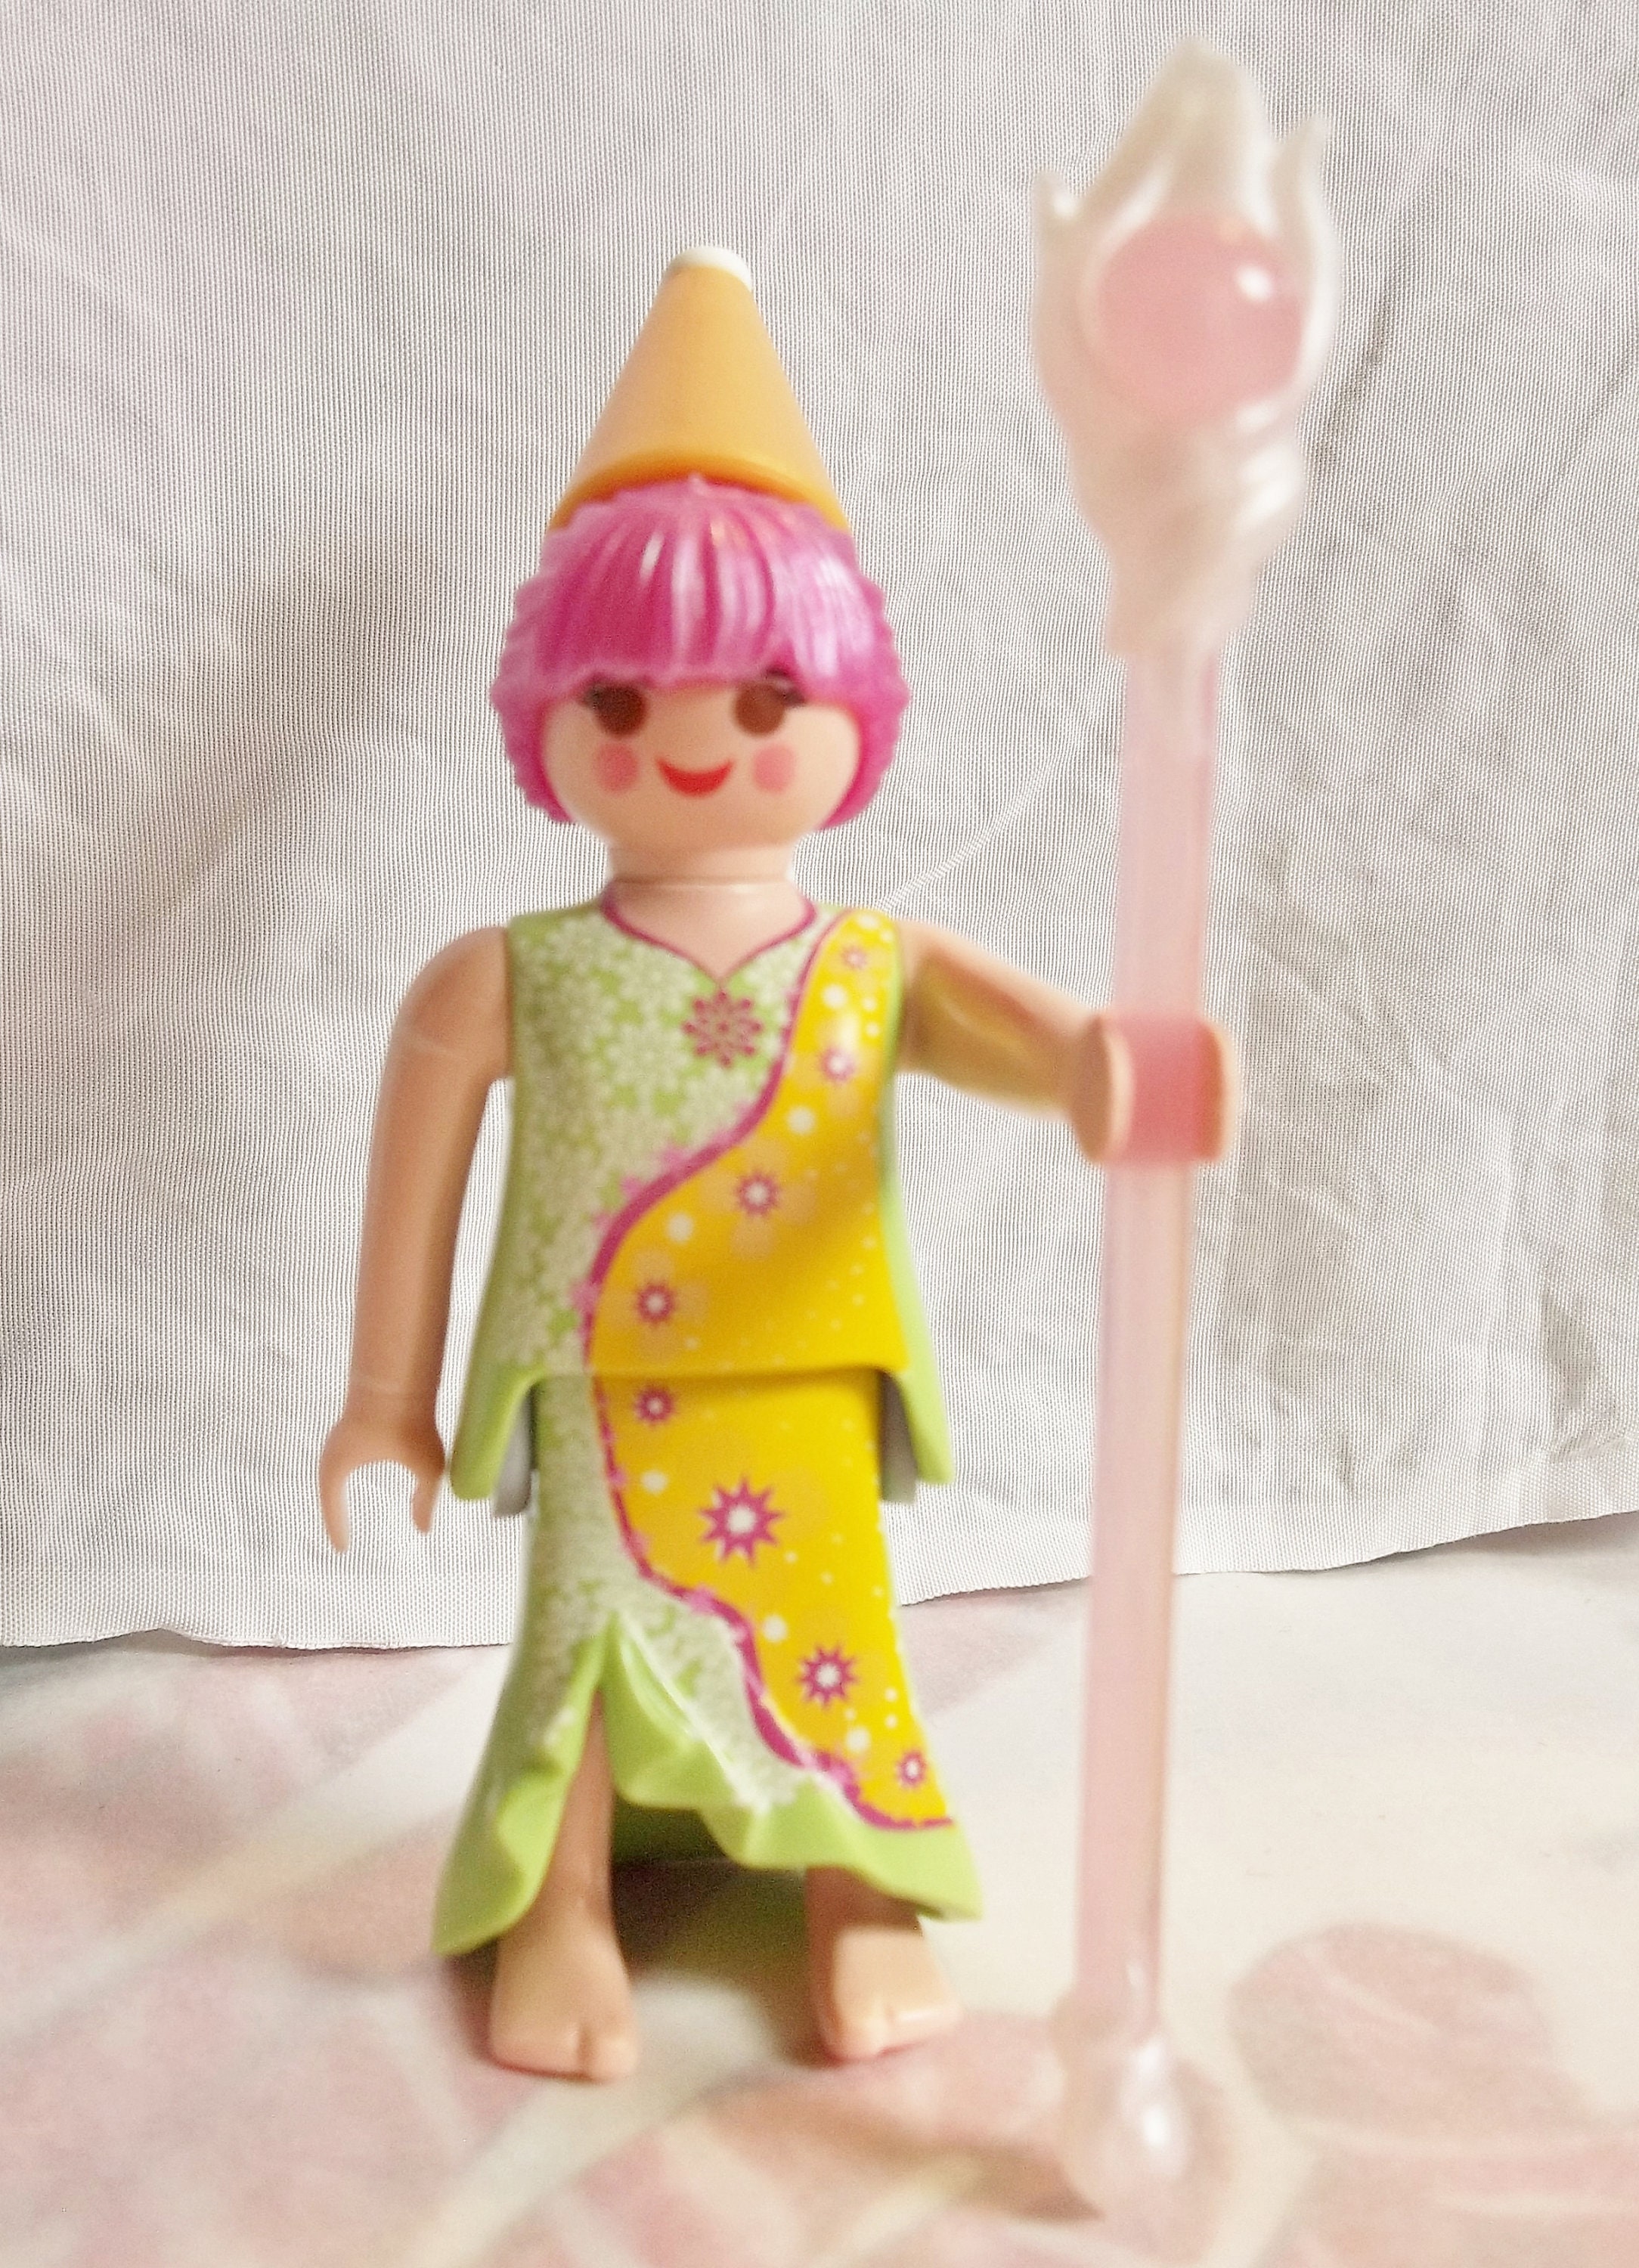 70453 - Playmobil Princess - Chambre de princesse Playmobil : King